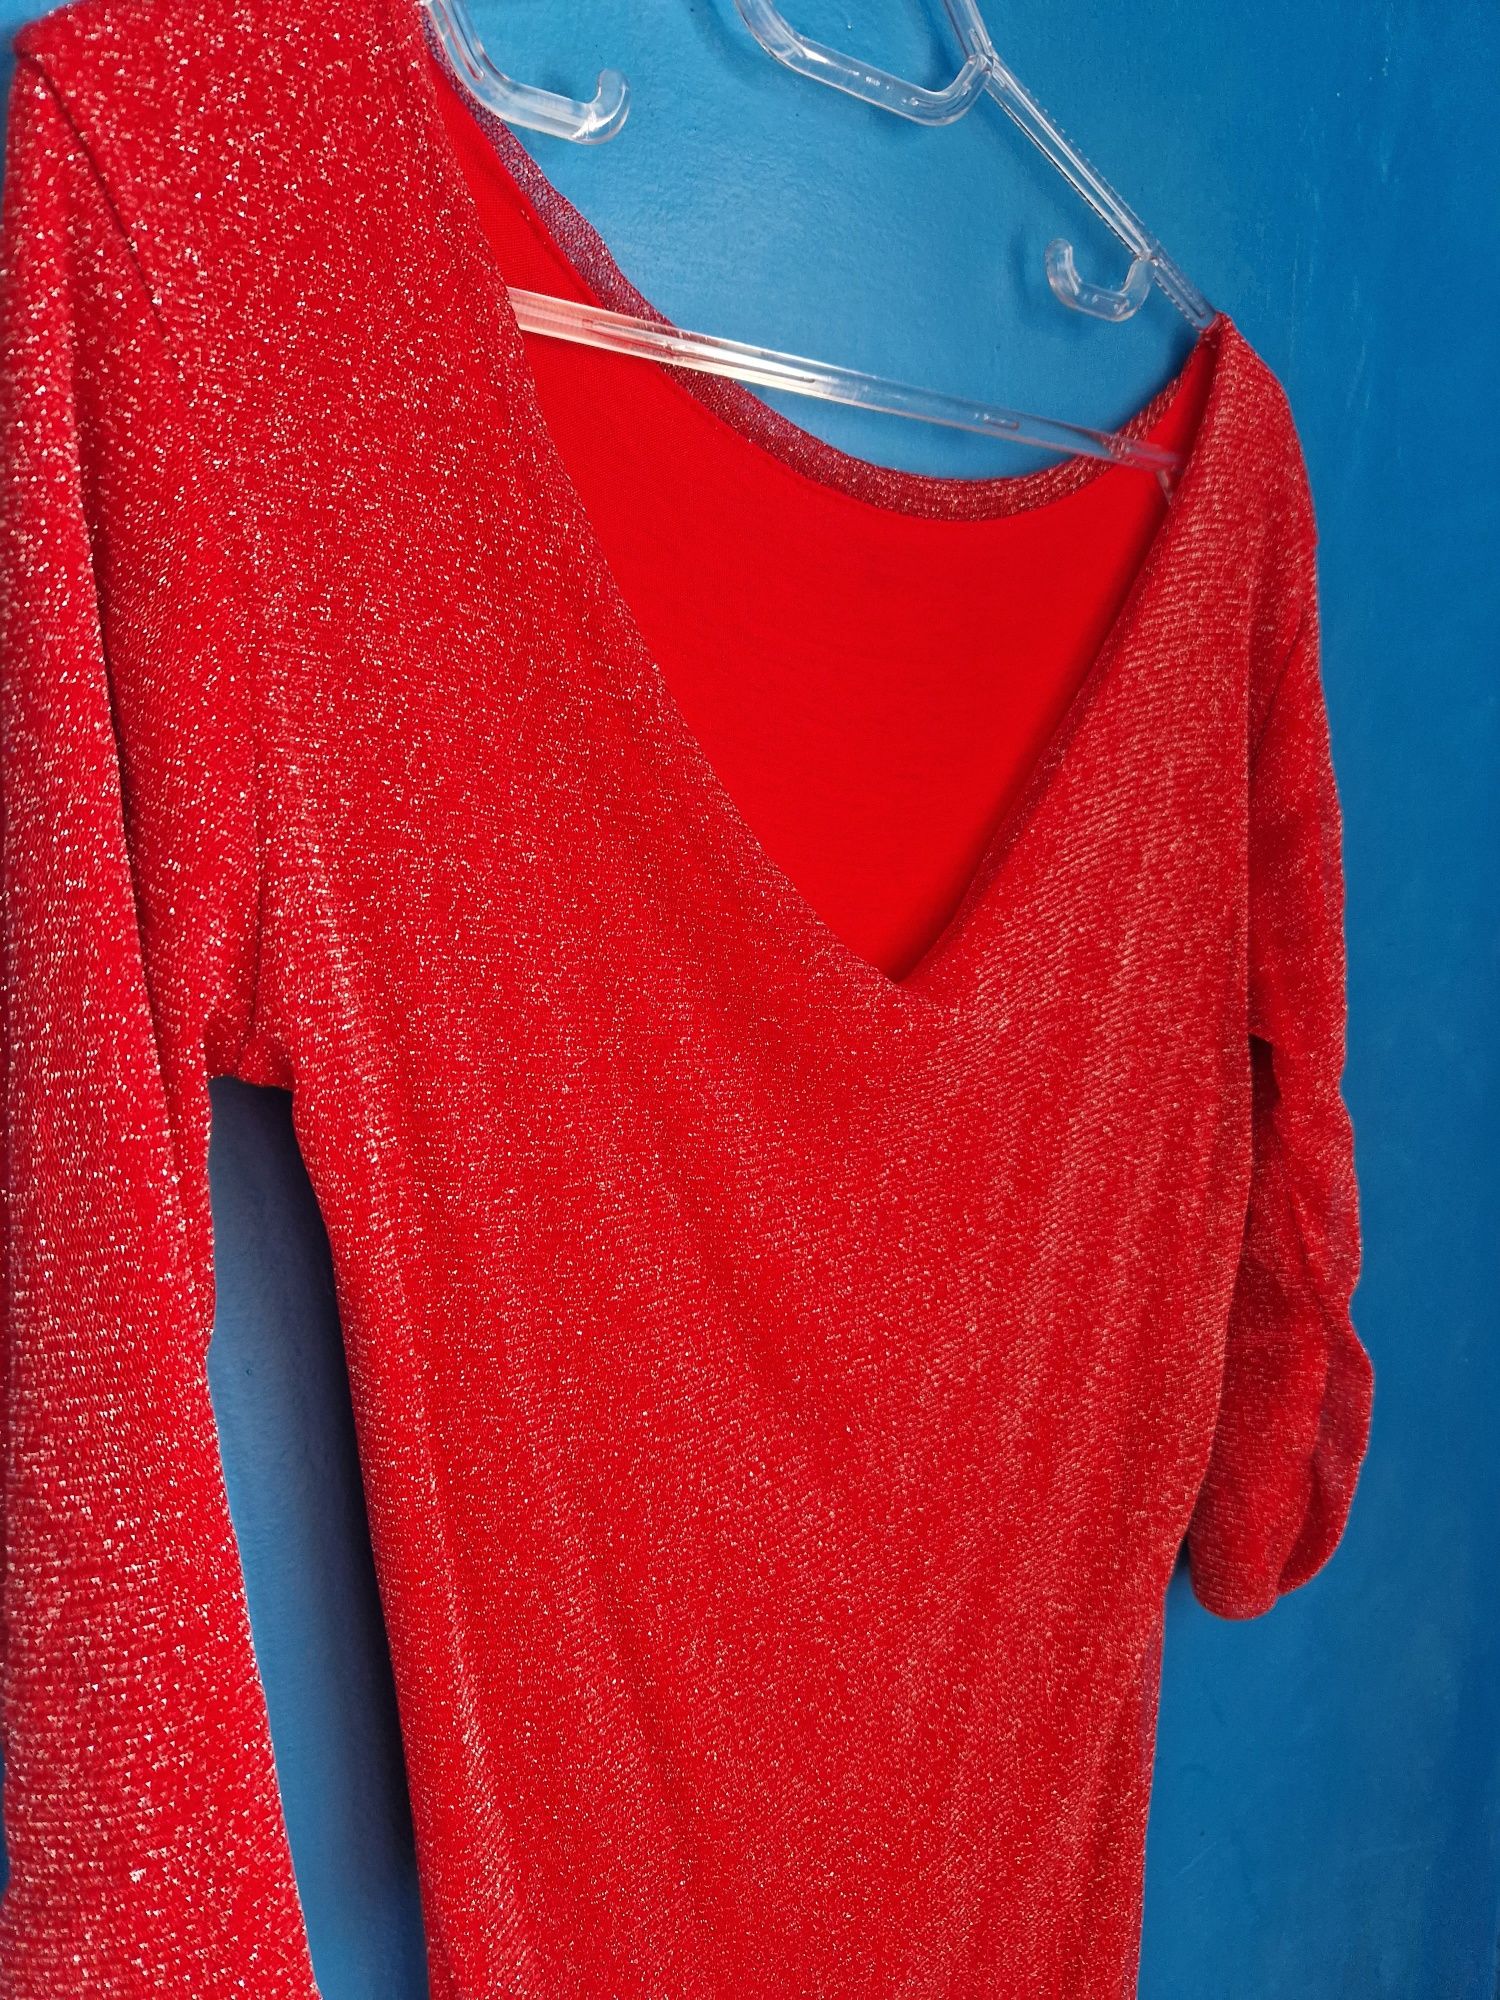 Червена рокля със сребристи нишки